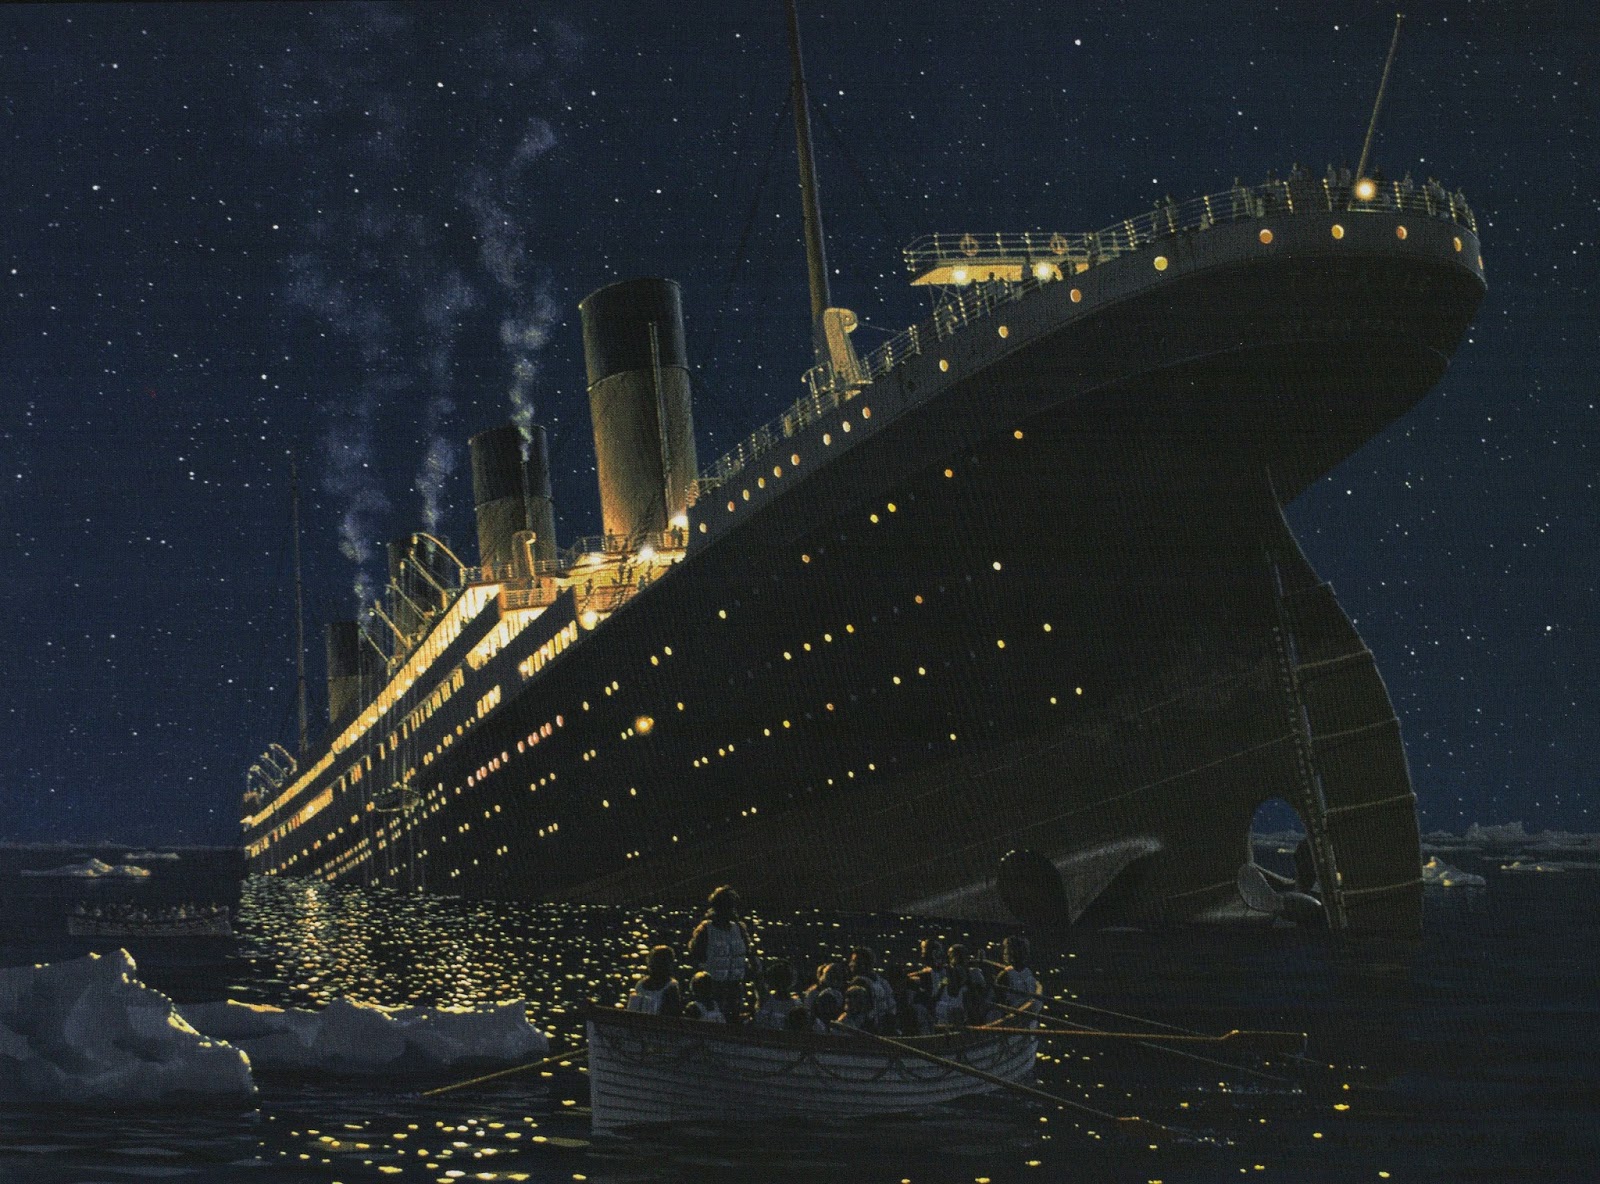 Titanic History S Most Famous Ship April 15 1912 The